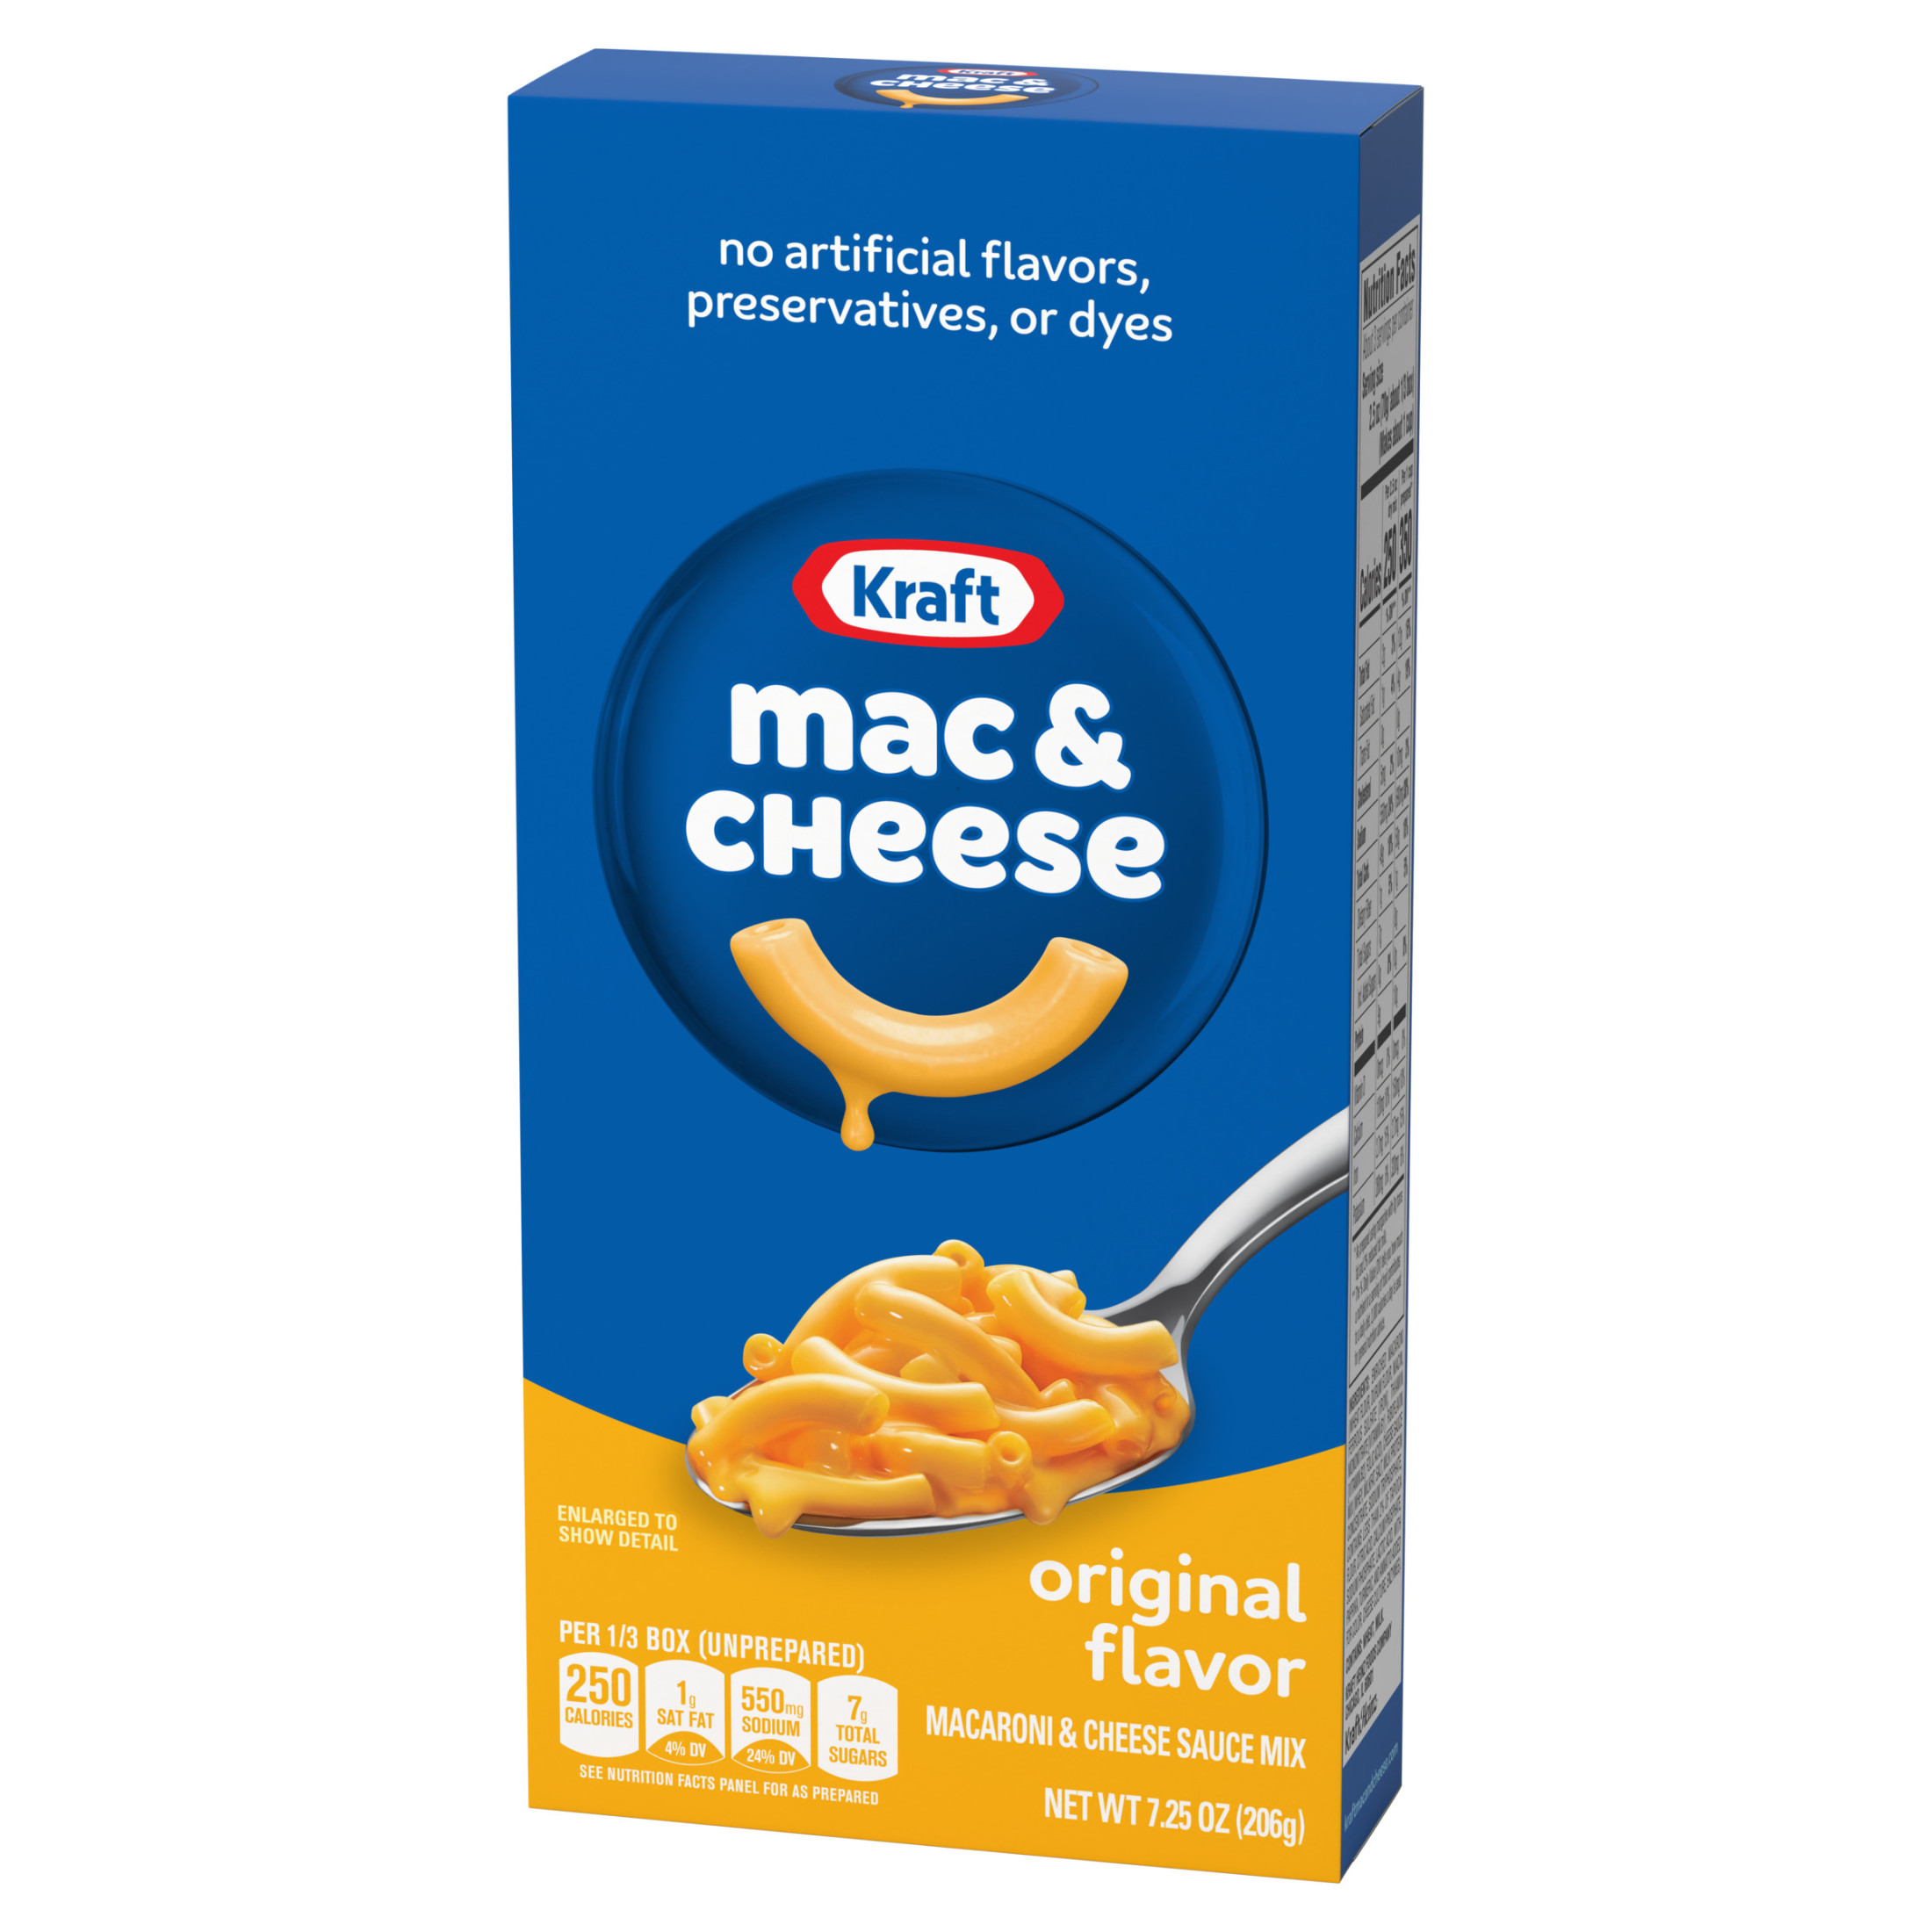 Kraft Original Mac N Cheese Macaroni and Cheese Dinner, 7.25 oz Box - image 13 of 19